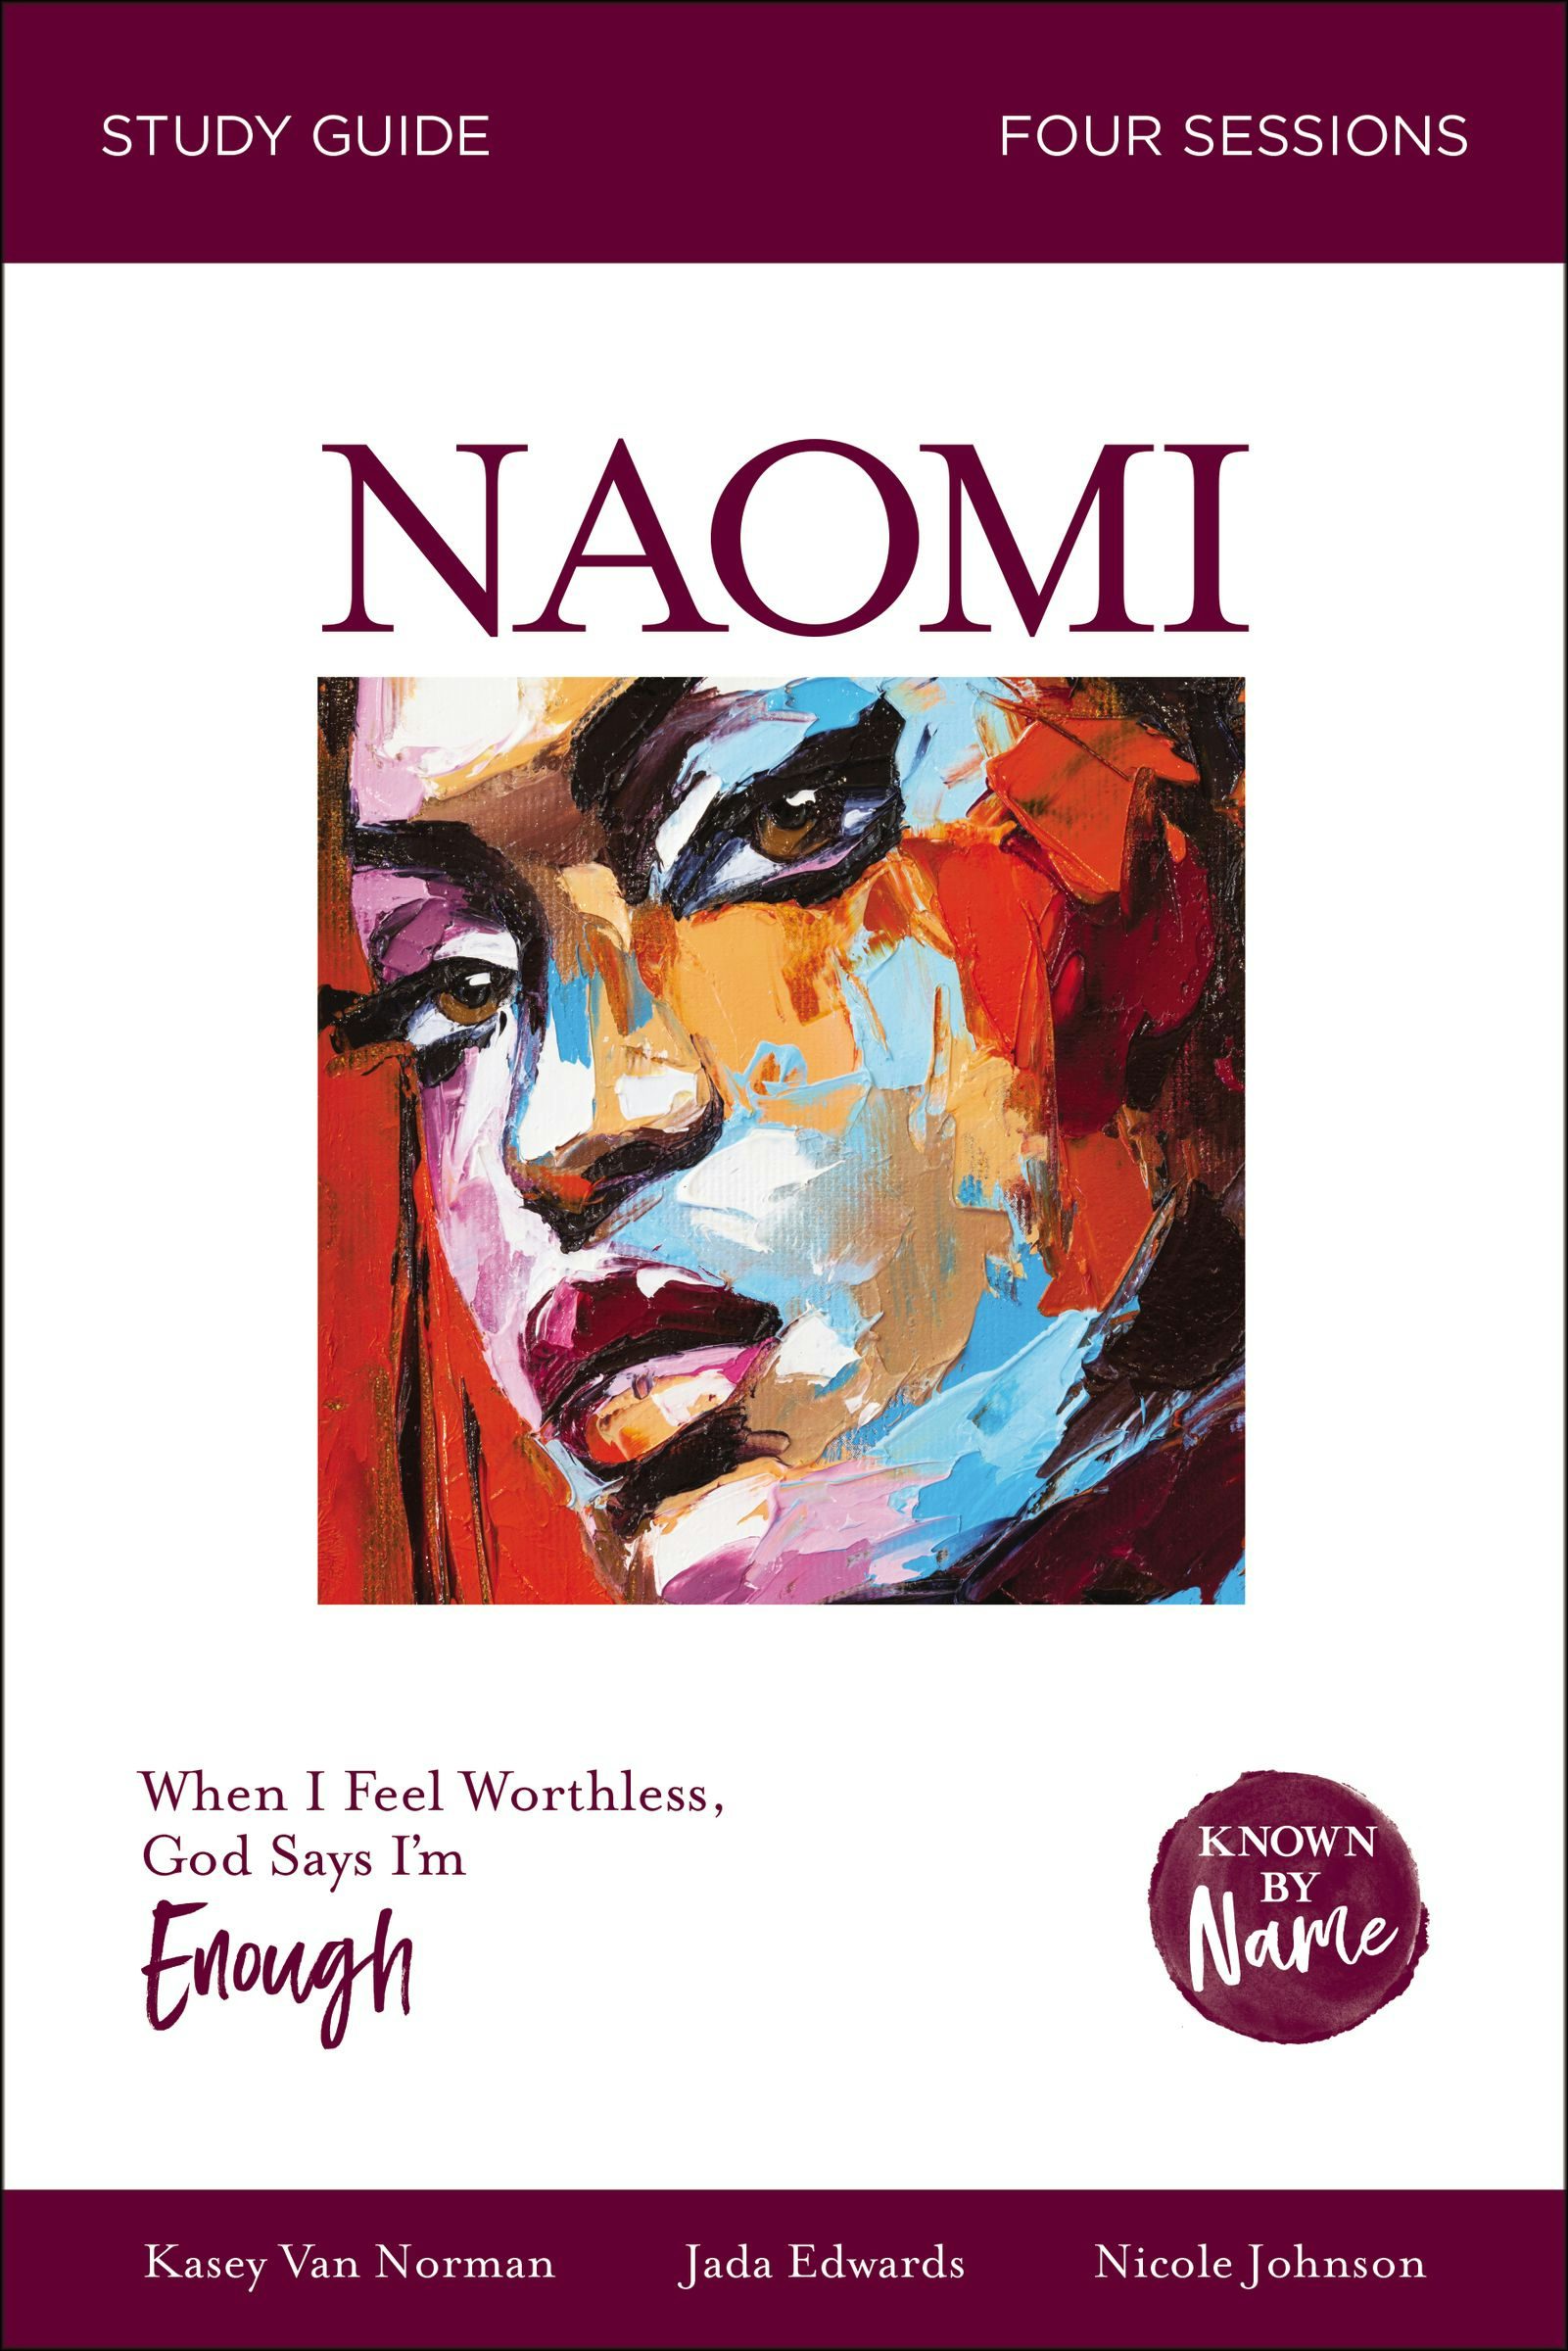 the graduate book naomi